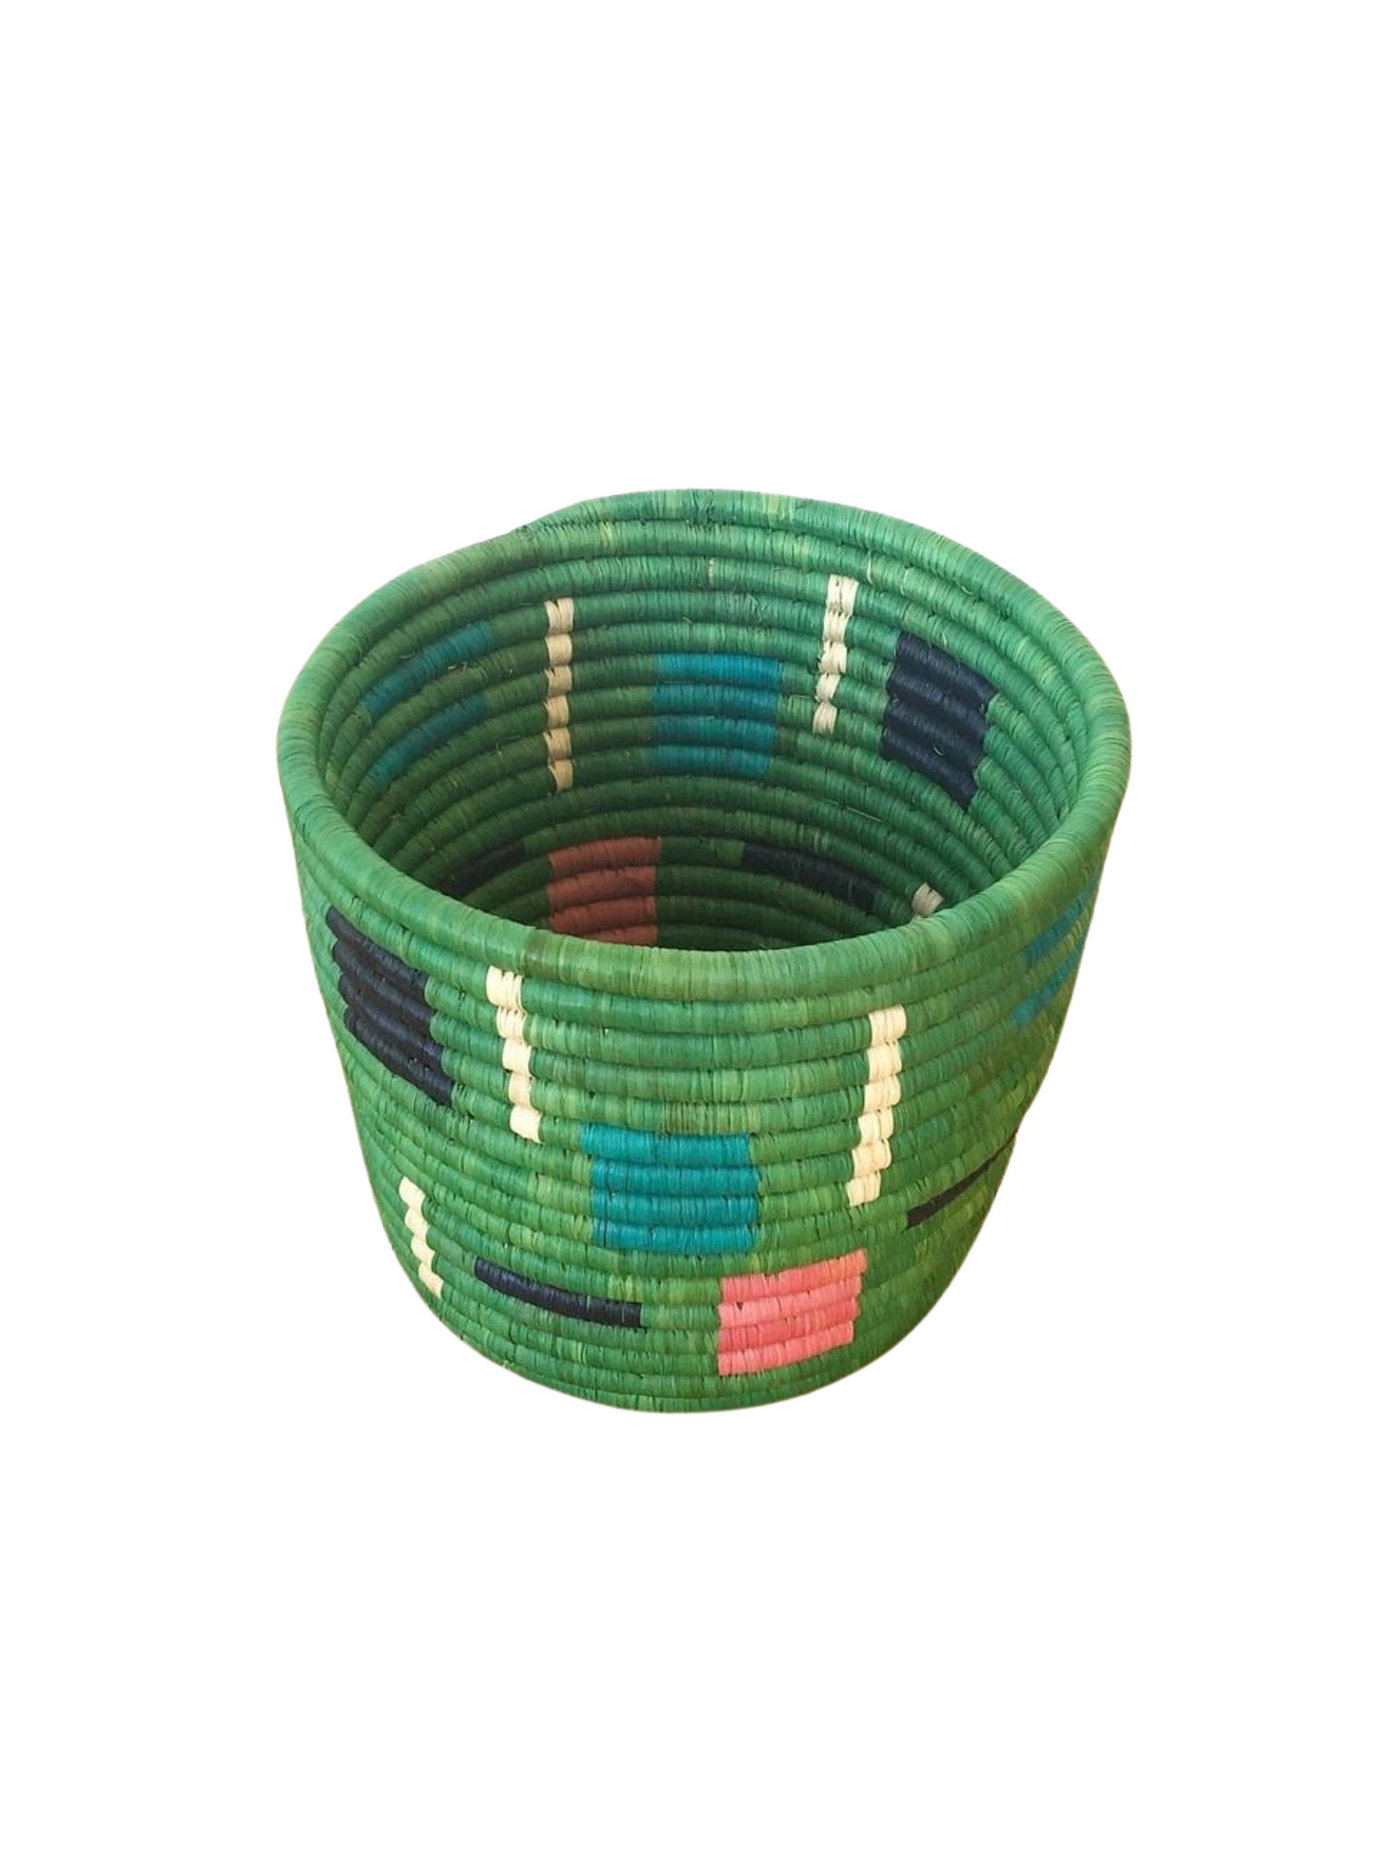 Beni Storage Plant Basket